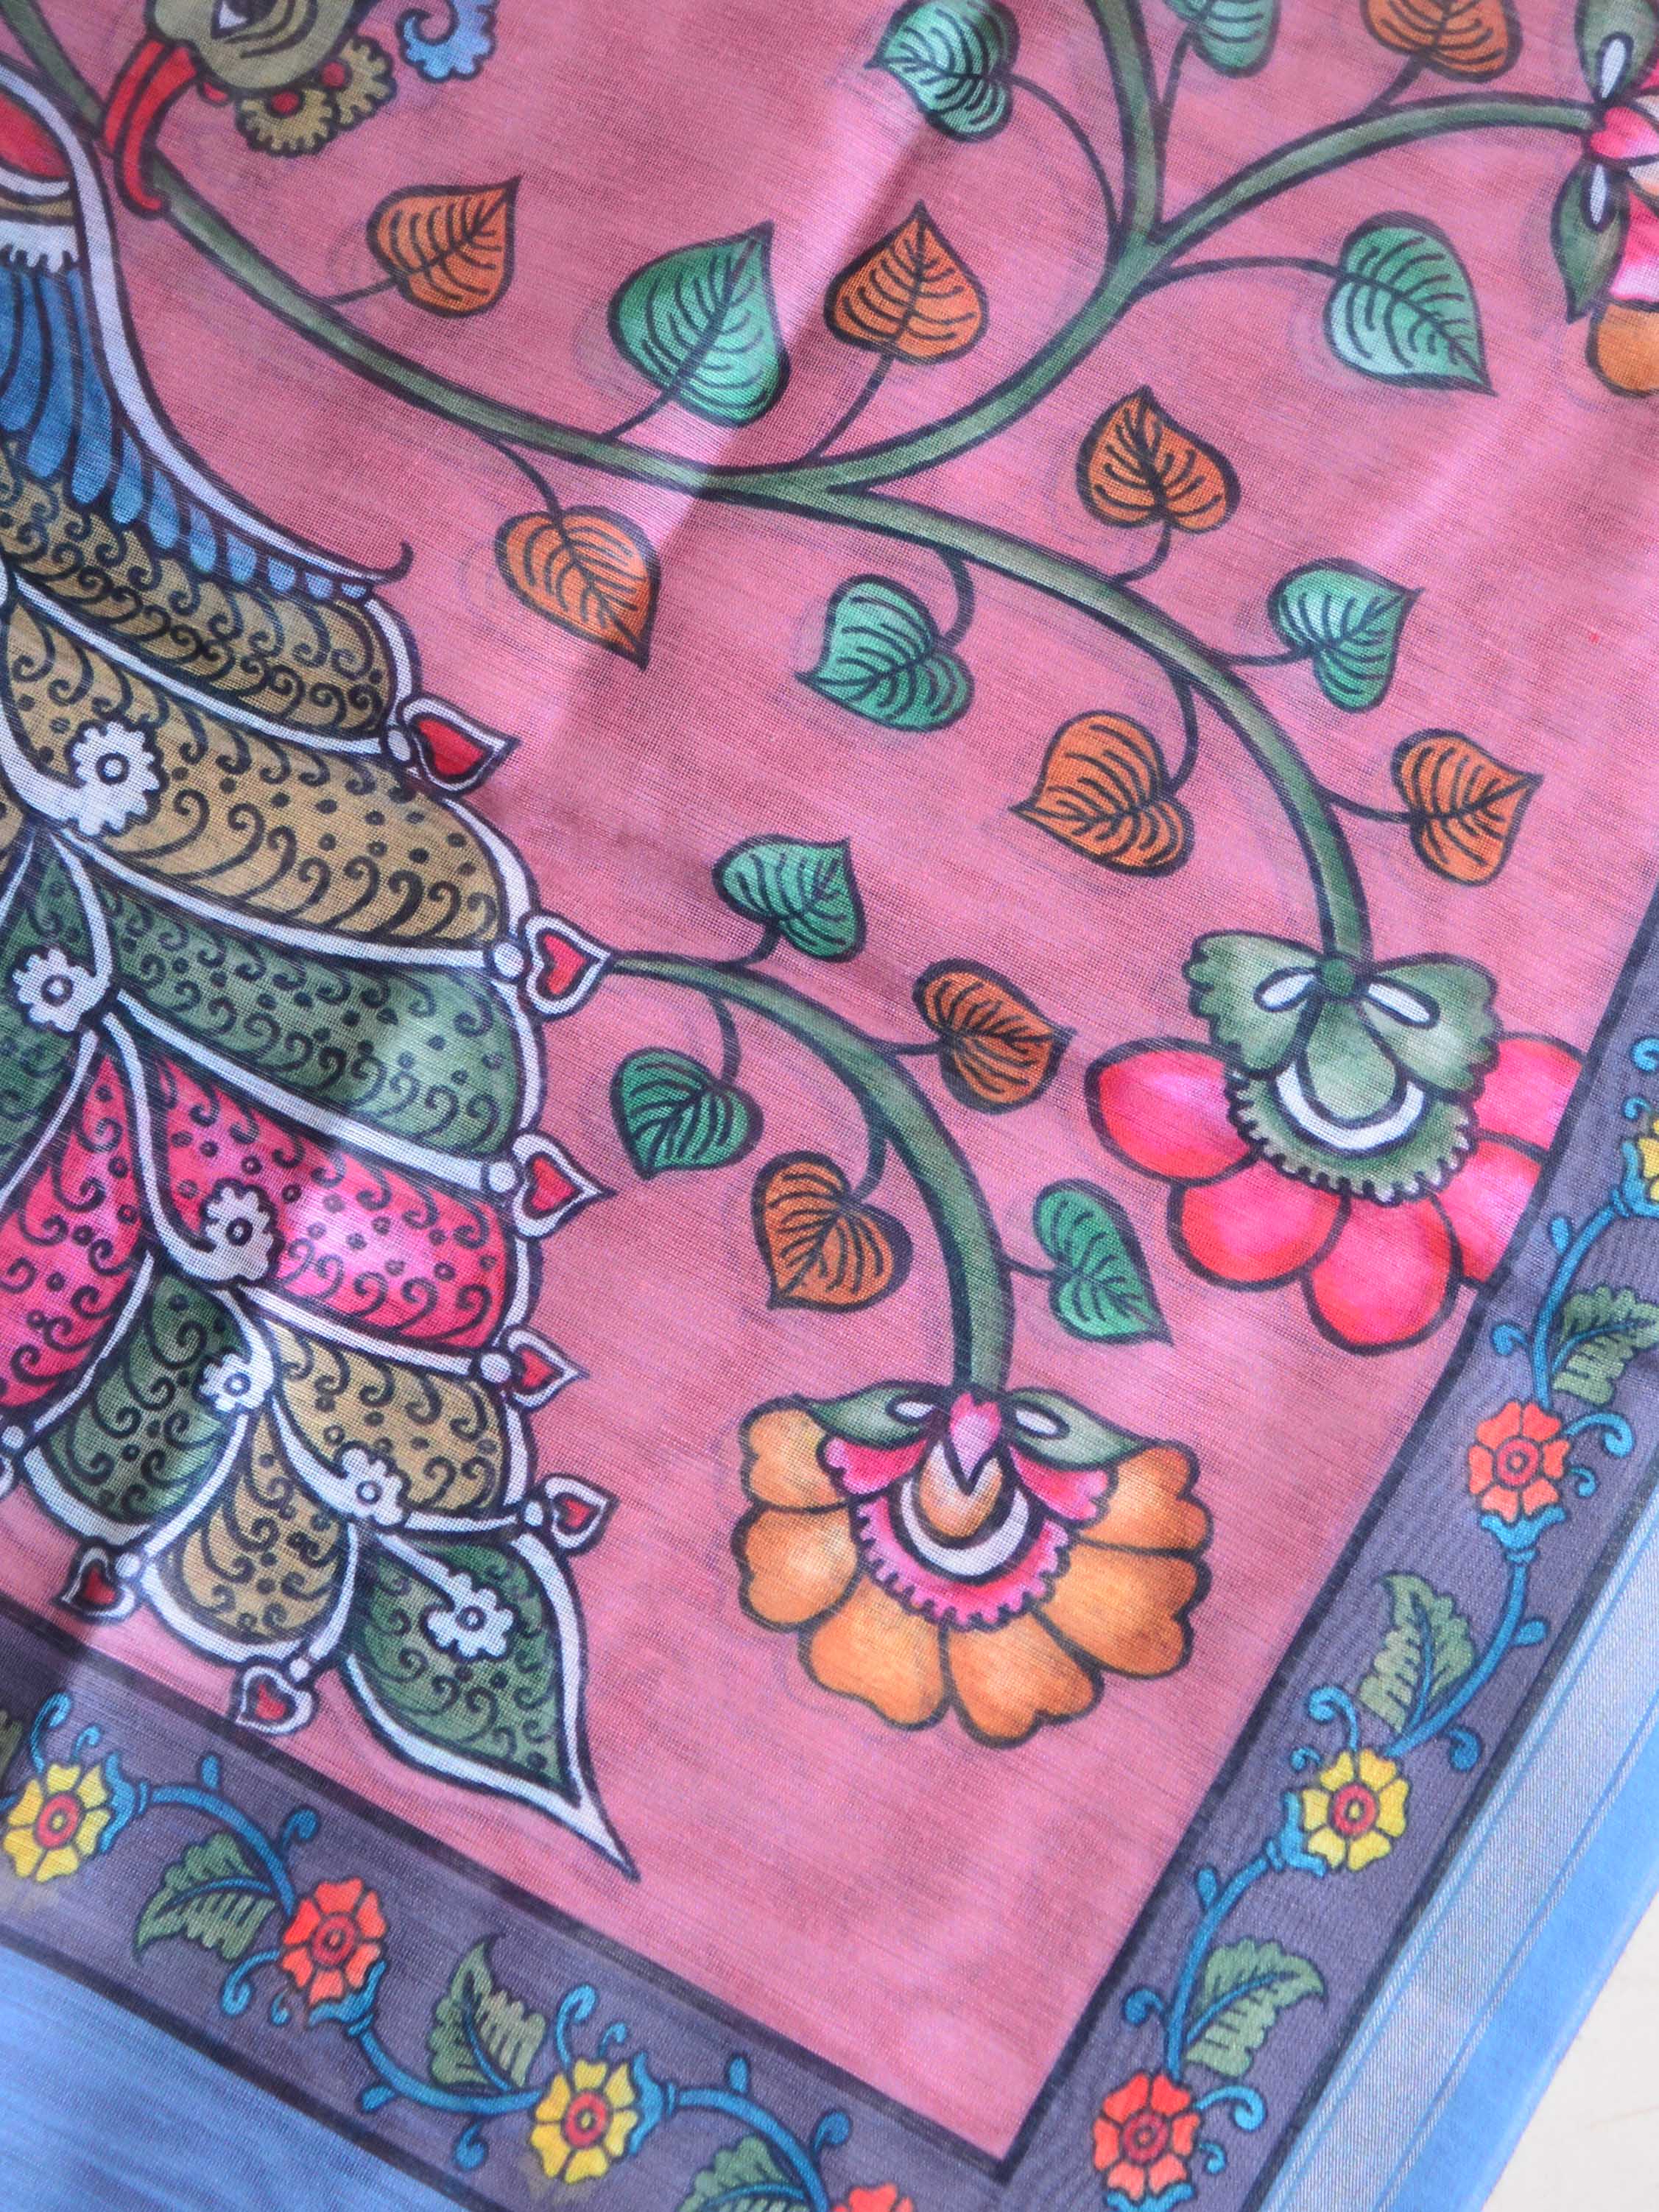 Banarasee Chanderi Silk Zari Buti Salwar Kameez Fabric With Digital Print Dupatta-Blush Pink